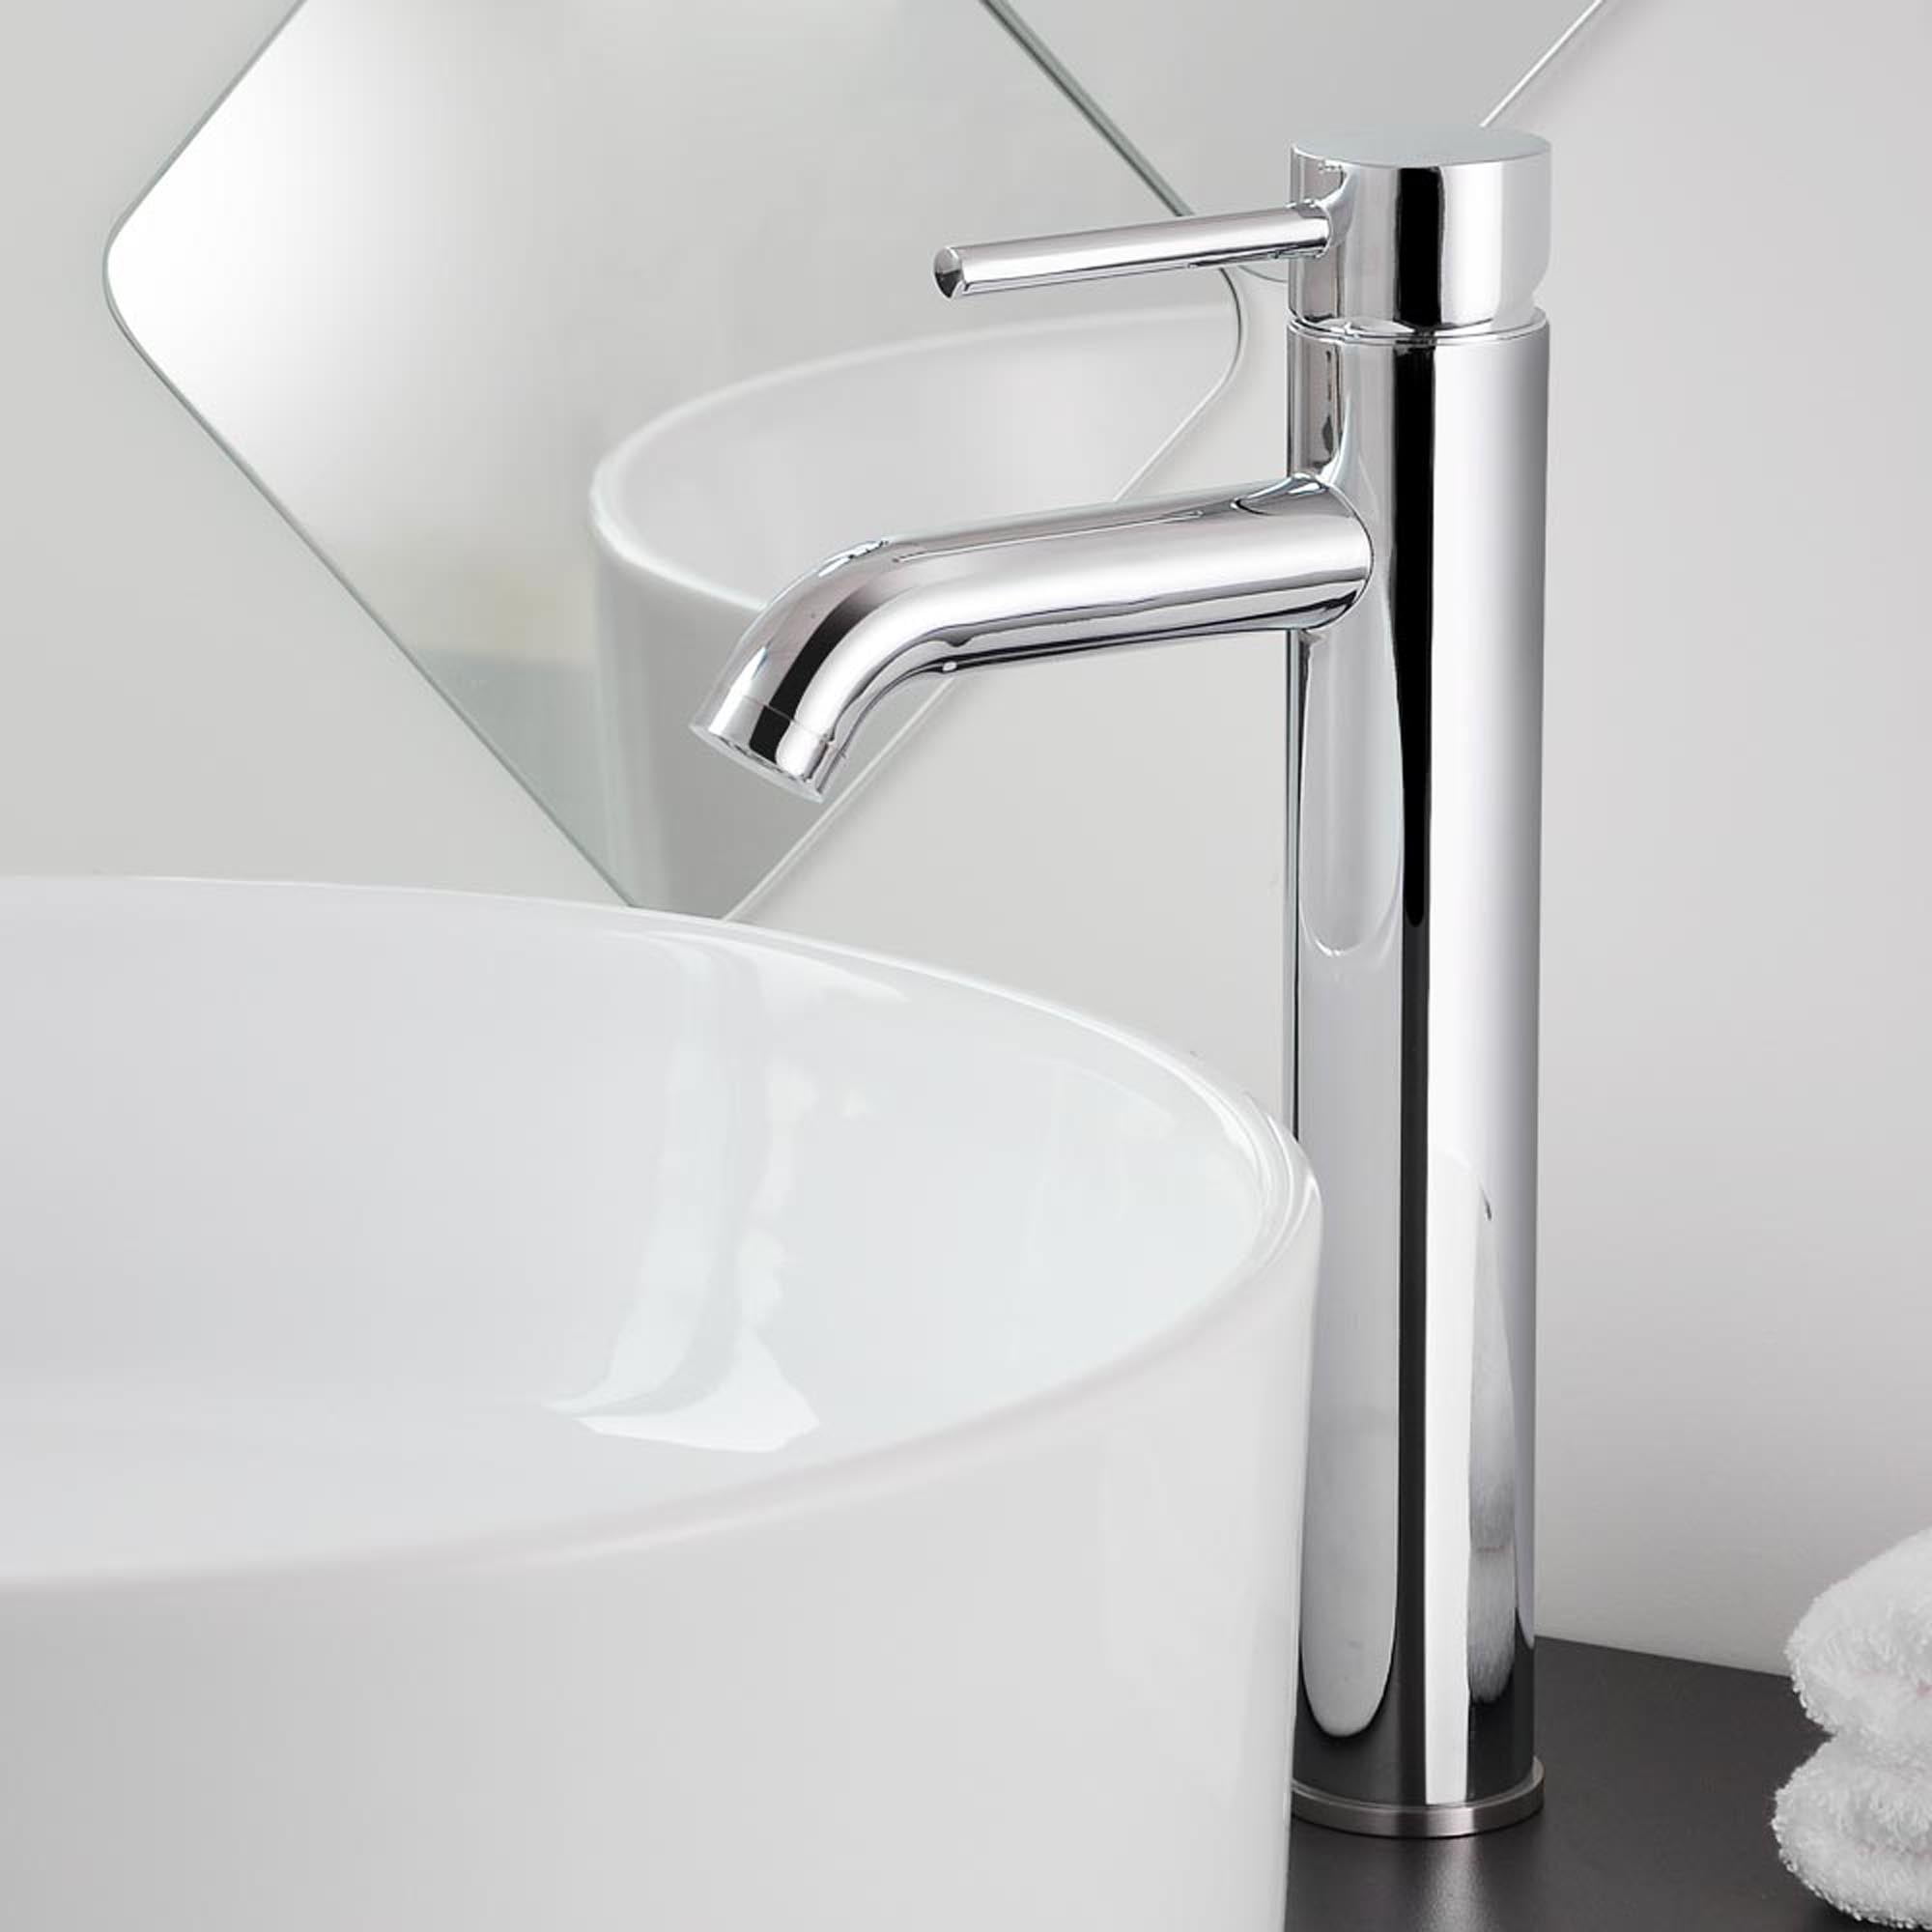 New European Square Style Bath Bathroom Vessel Sink Faucet Quality Chrome Finish 